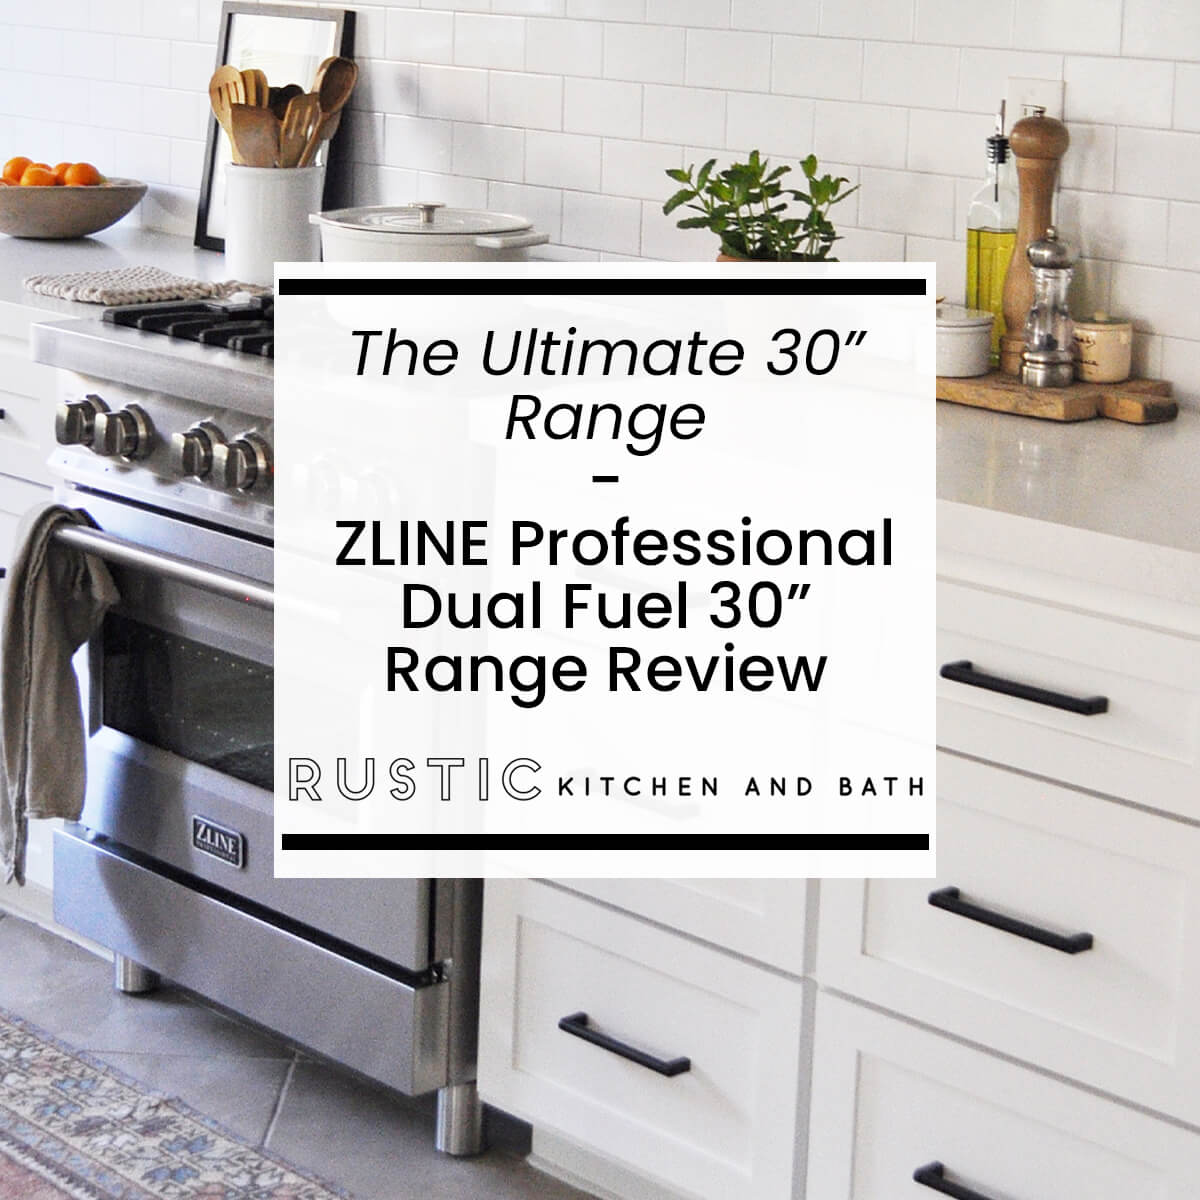 The Ultimate 30” Range - ZLINE Professional Dual Fuel 30” Range